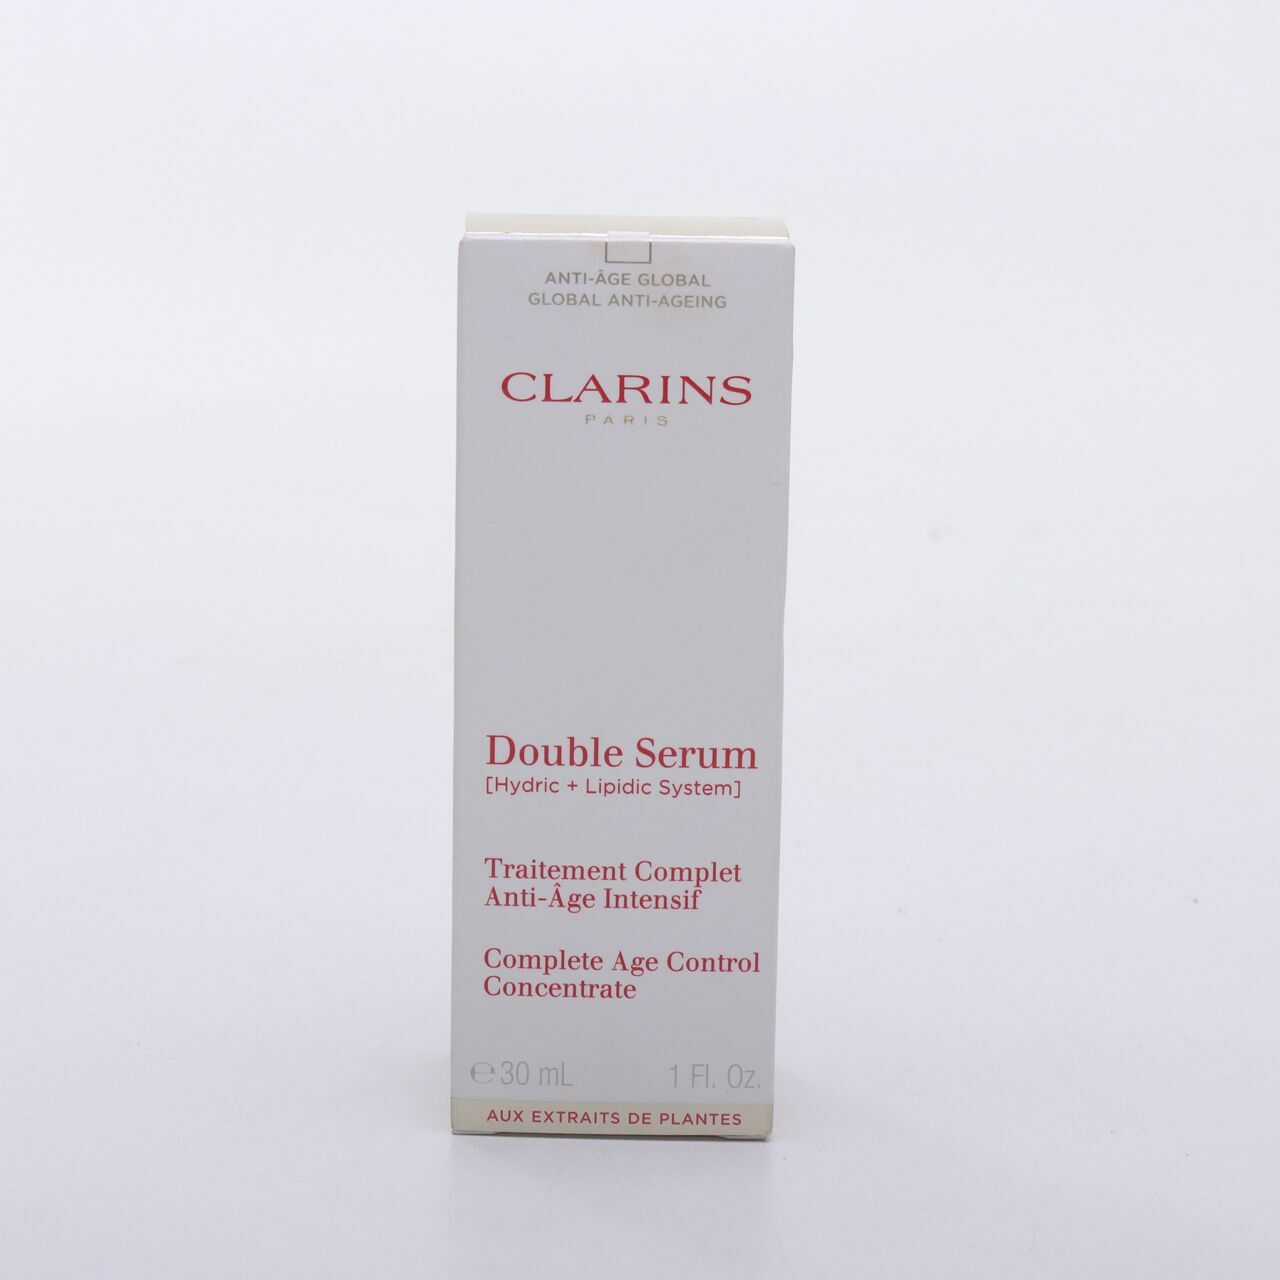 Clarins Double Serum Hydric+Lipidic System Skin Care